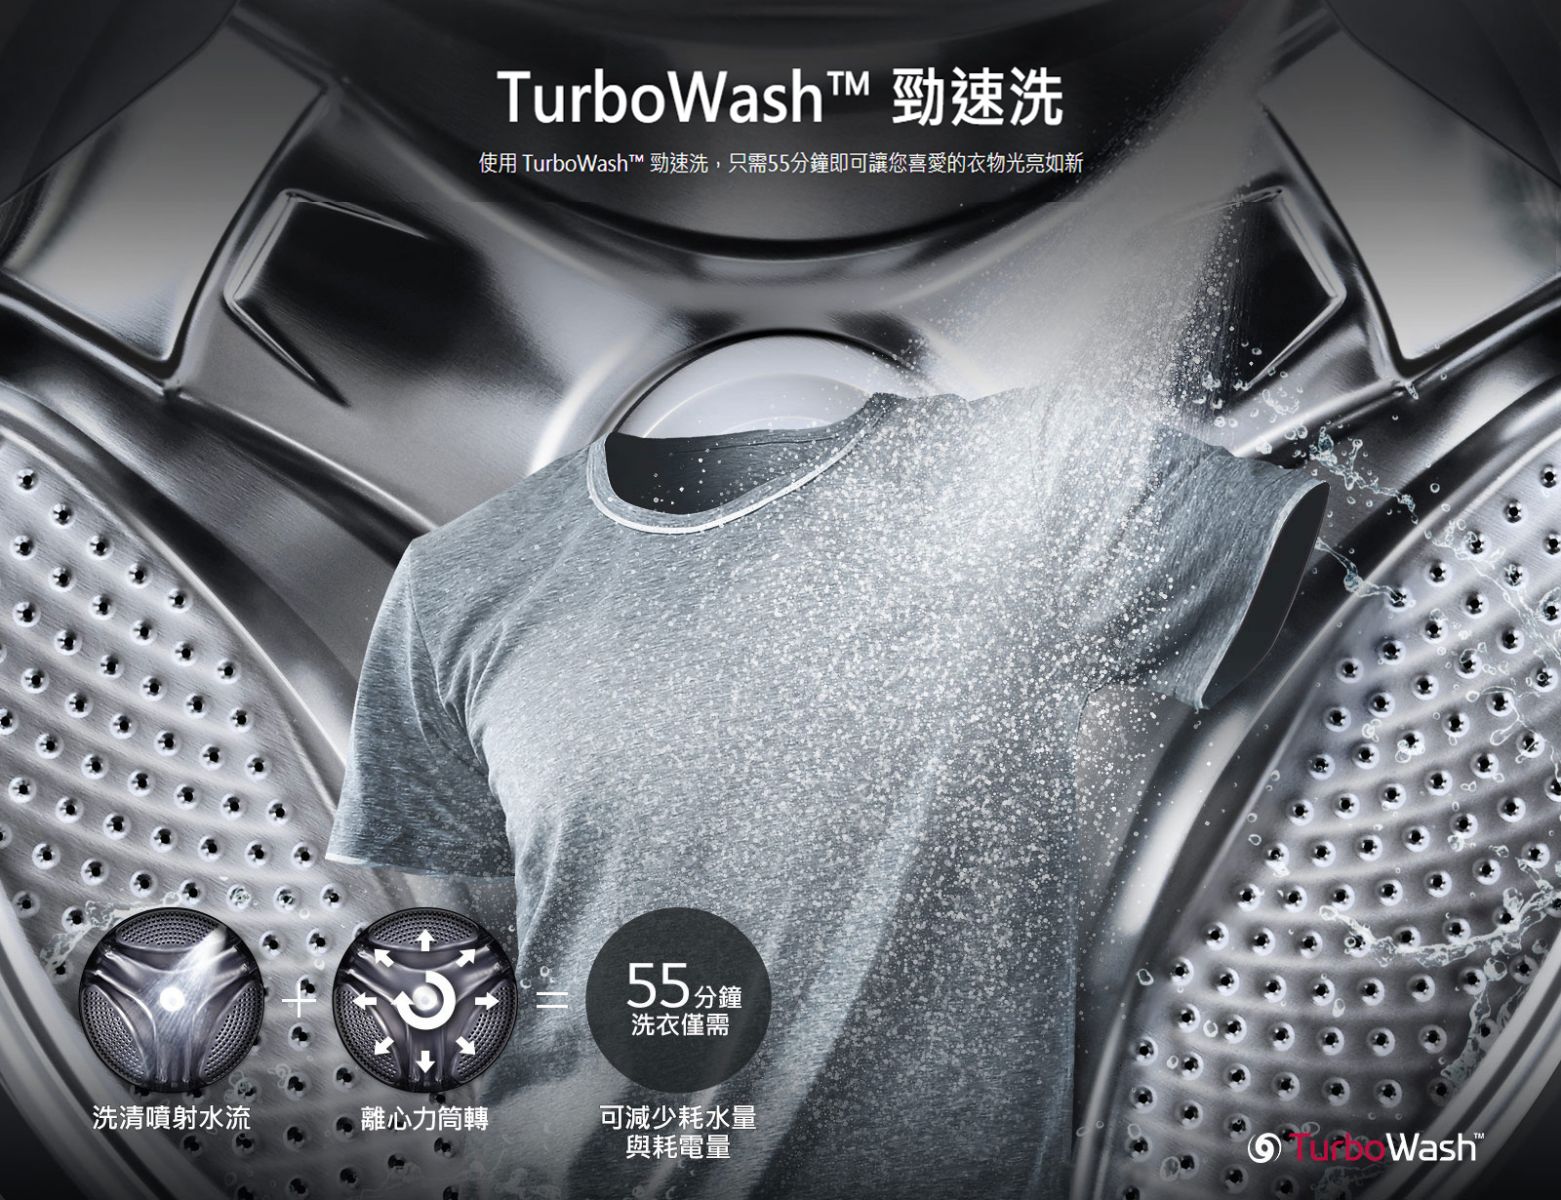 TurboWash™ 勁速洗 使用 TurboWash™ 勁速洗，只需55分鐘即可讓您喜愛的衣物光亮如新